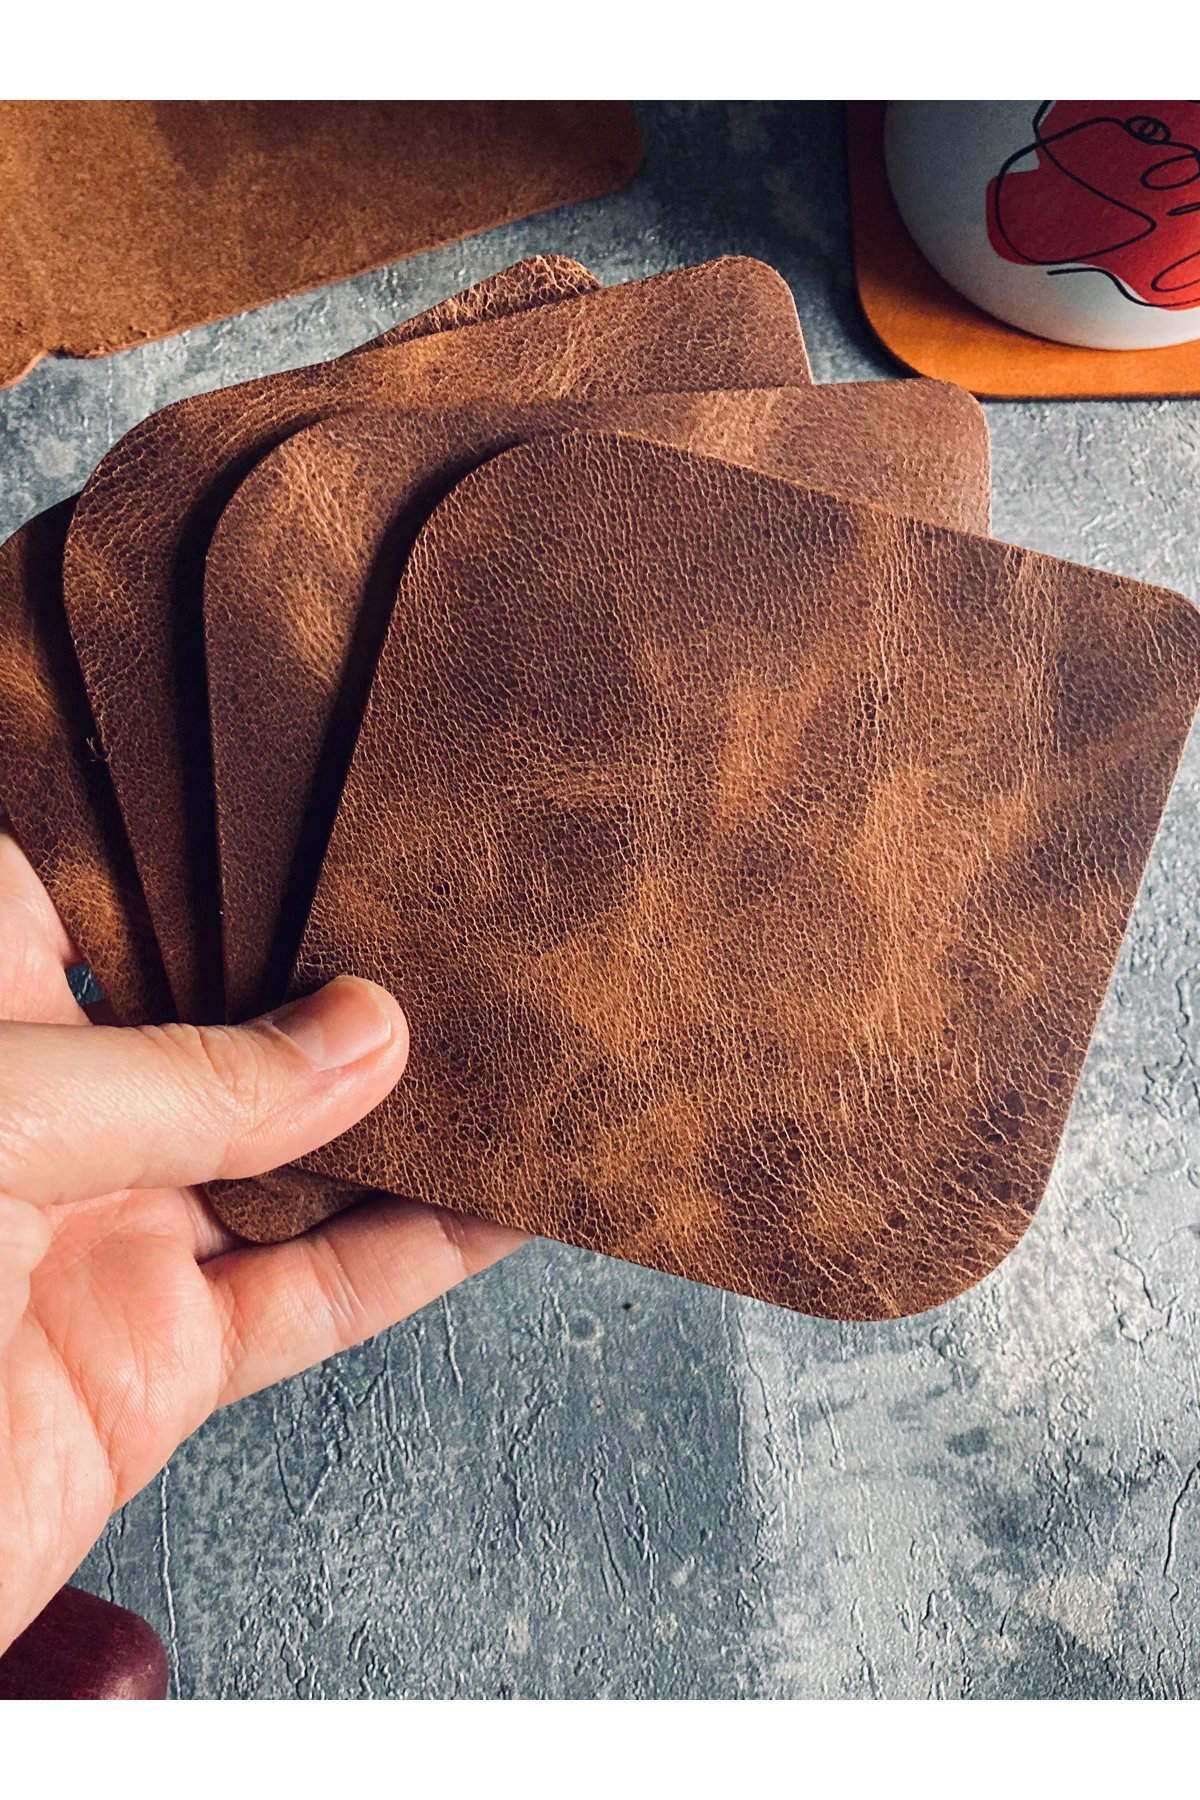 Set of 4 Genuine Leather Oval Coasters | Bretya Leather